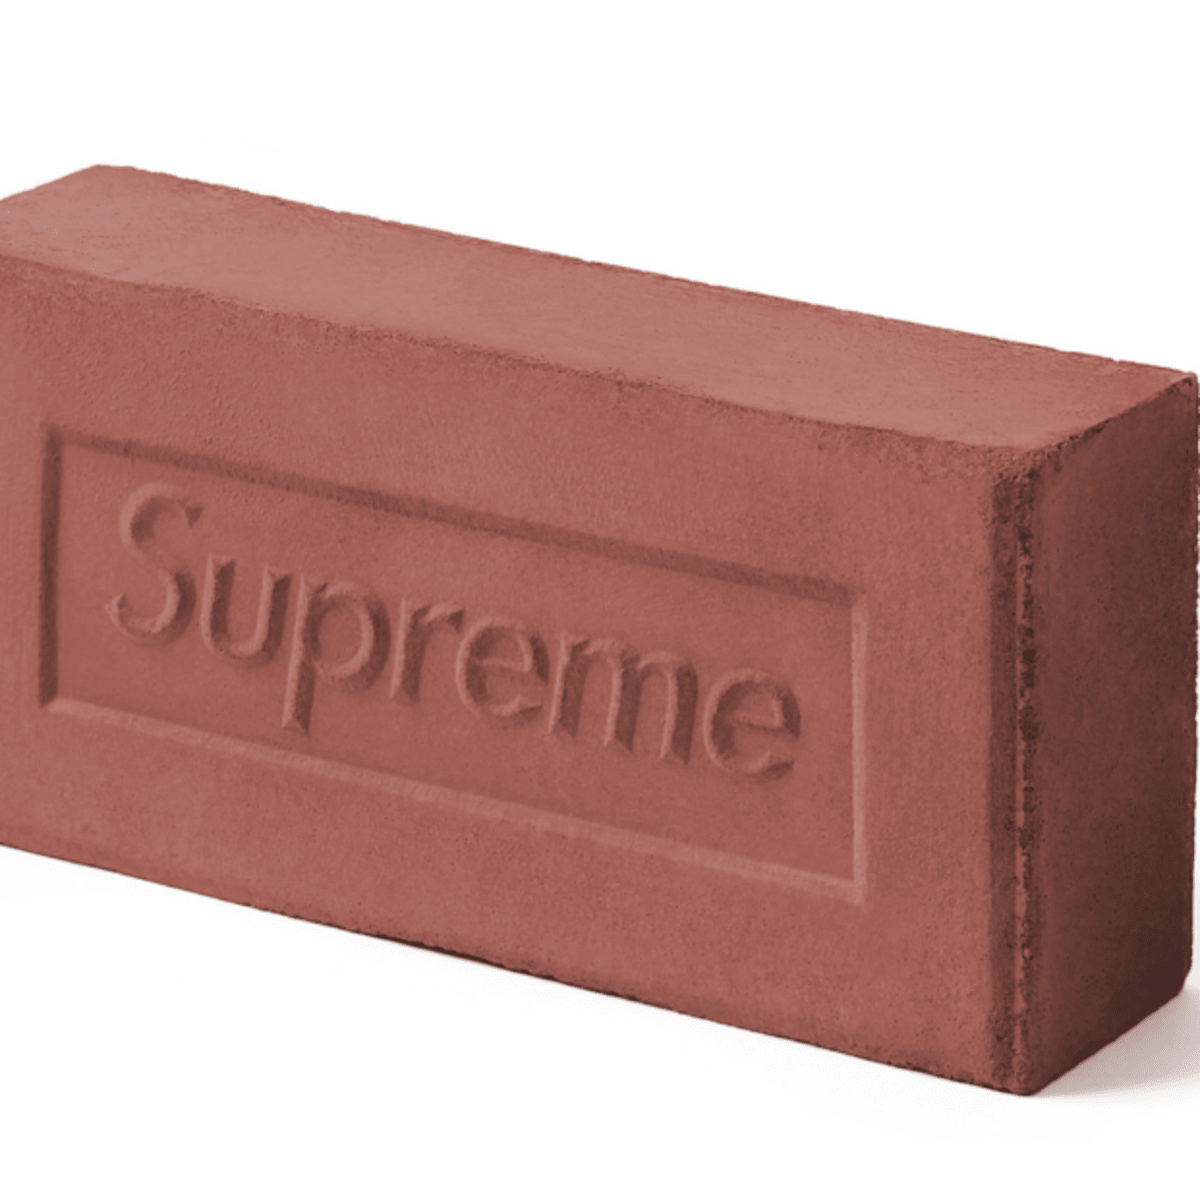 Skate brand Supreme sells clay bricks for $30, internet takes the bait -  Men's Journal